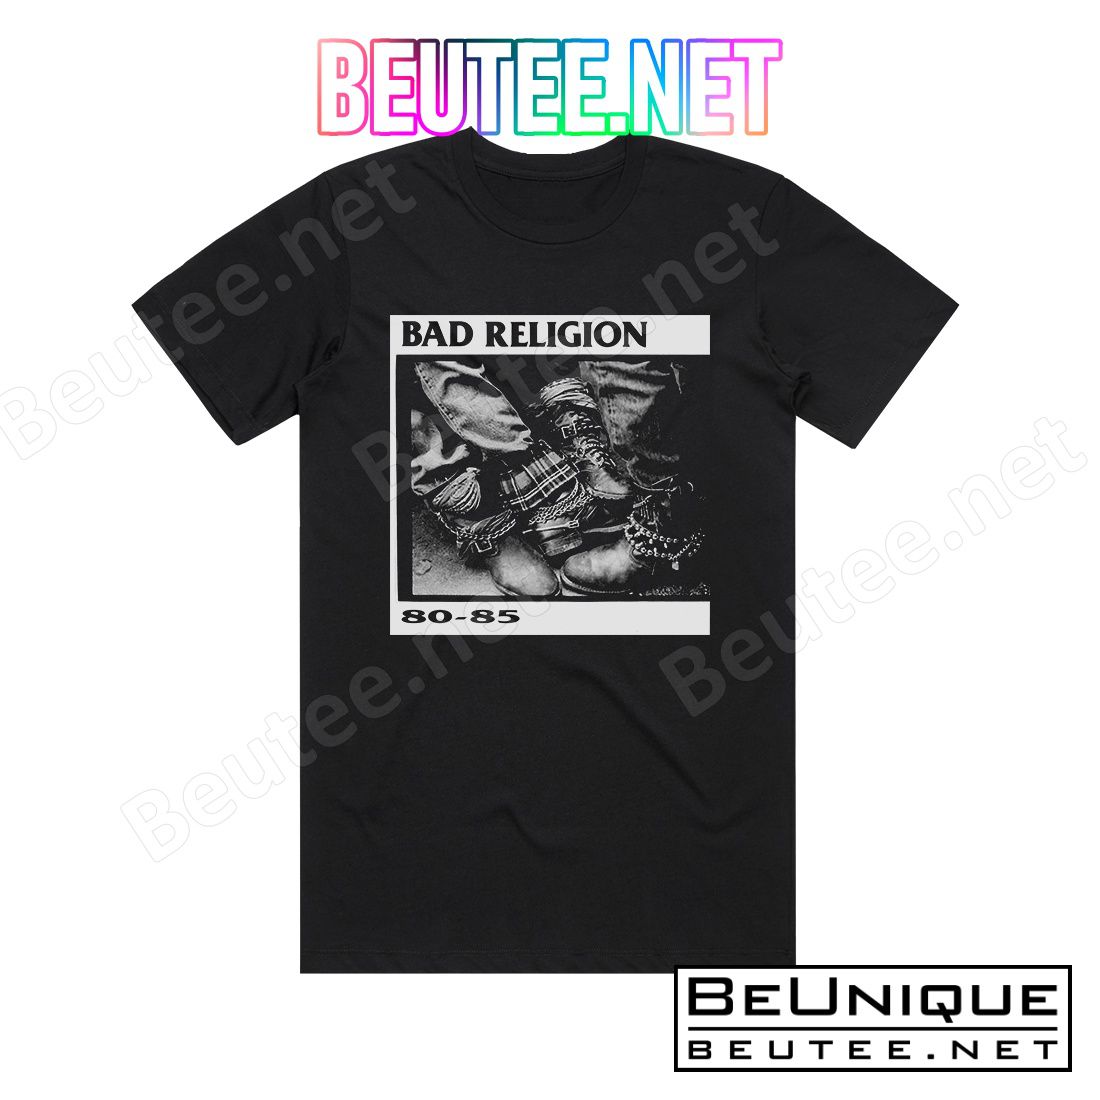 Bad Religion 80 85 Album Cover T-Shirt